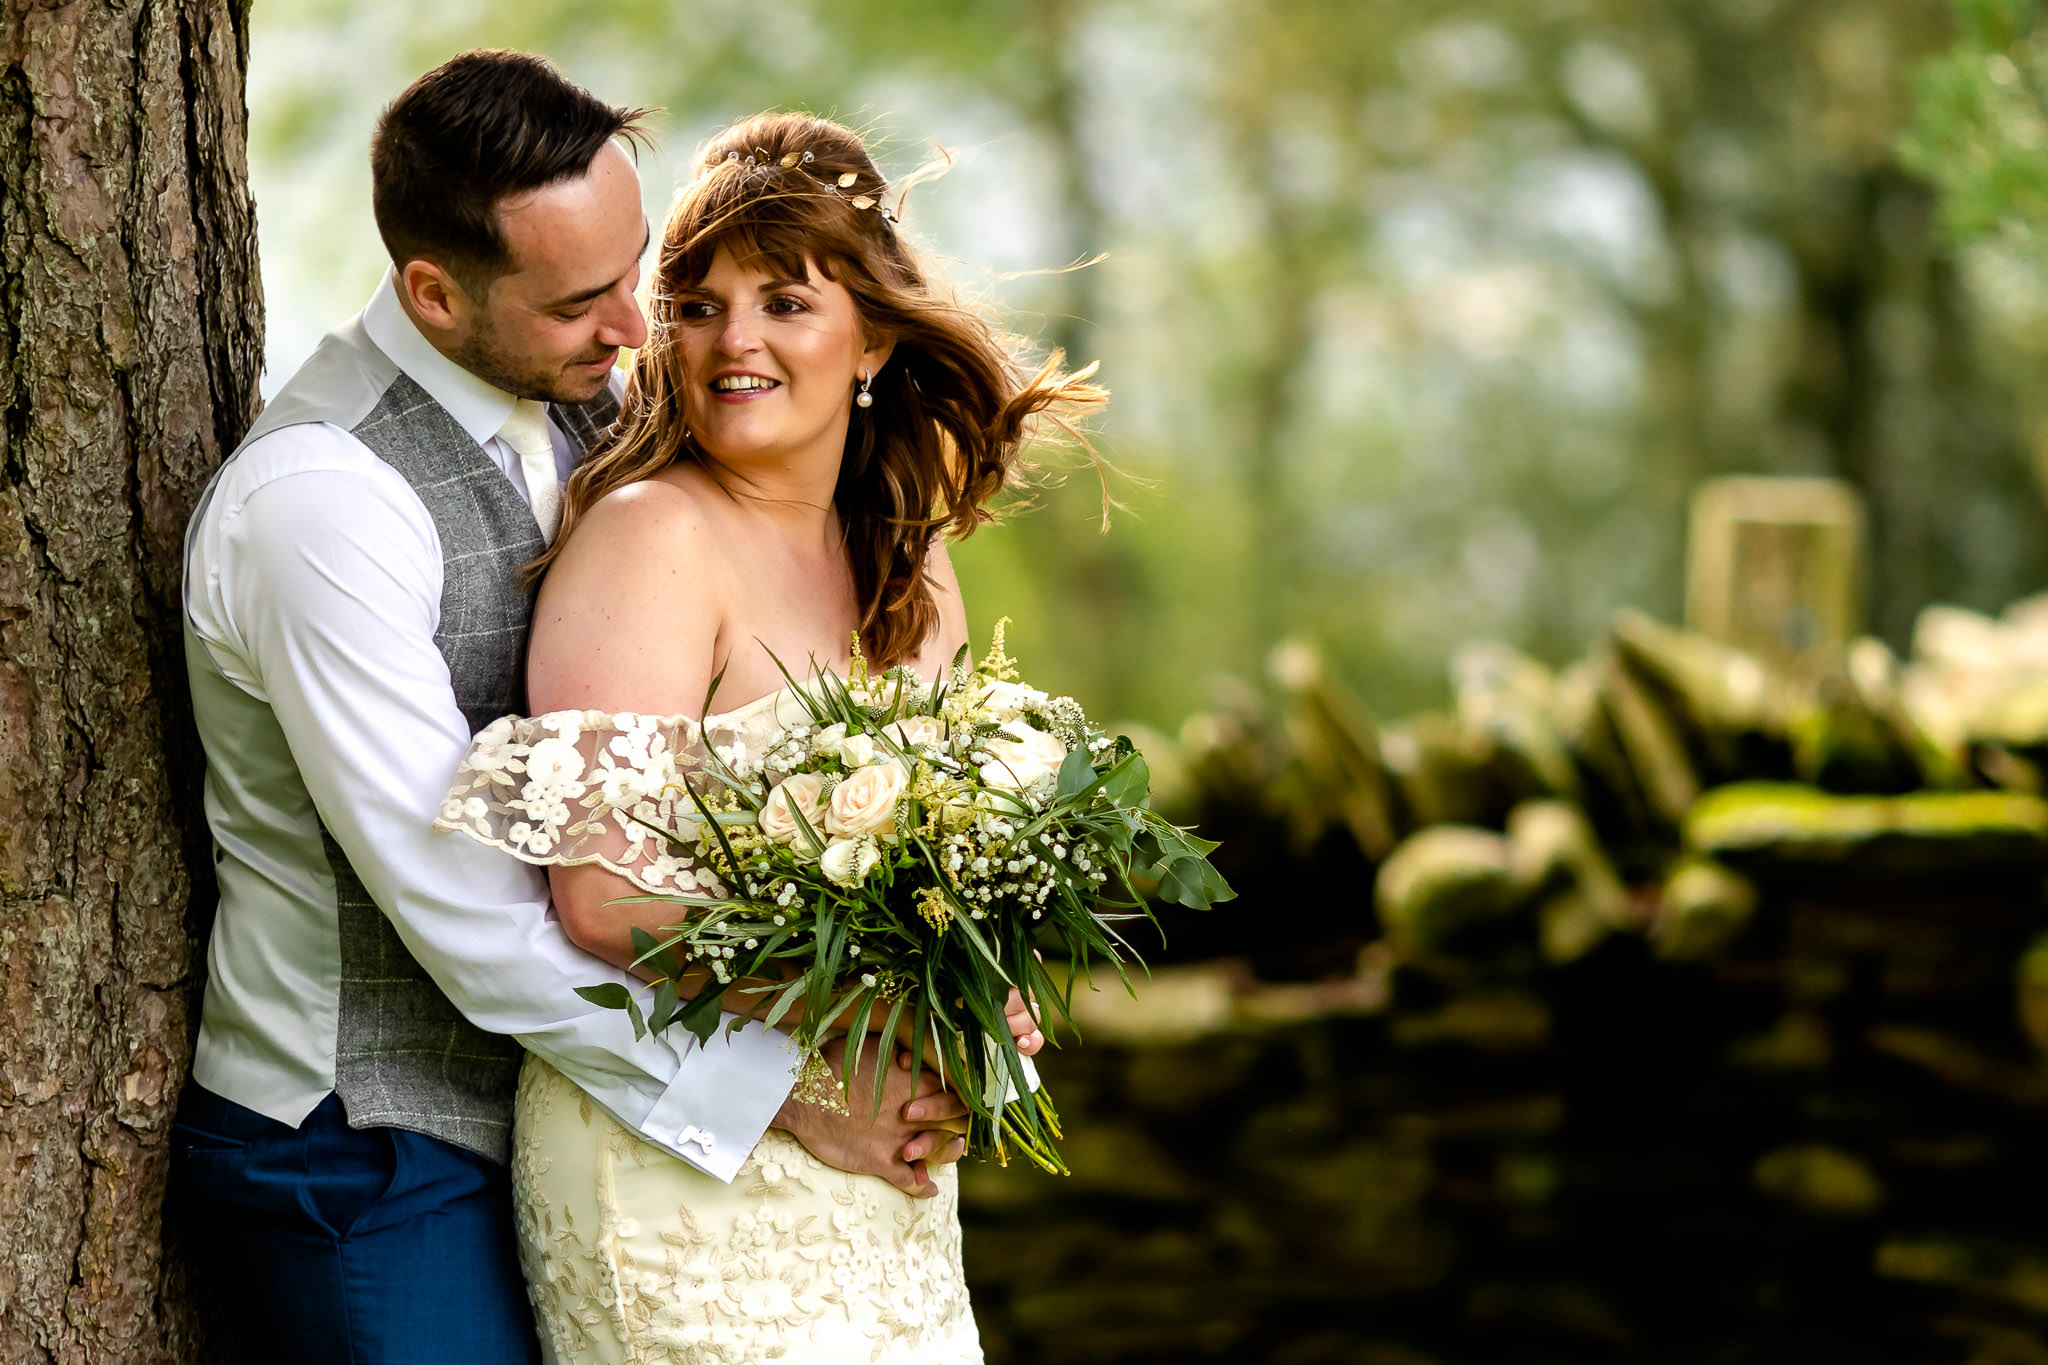 Llechwen Hall Wedding Photography - Art by Design - Bride and Groom